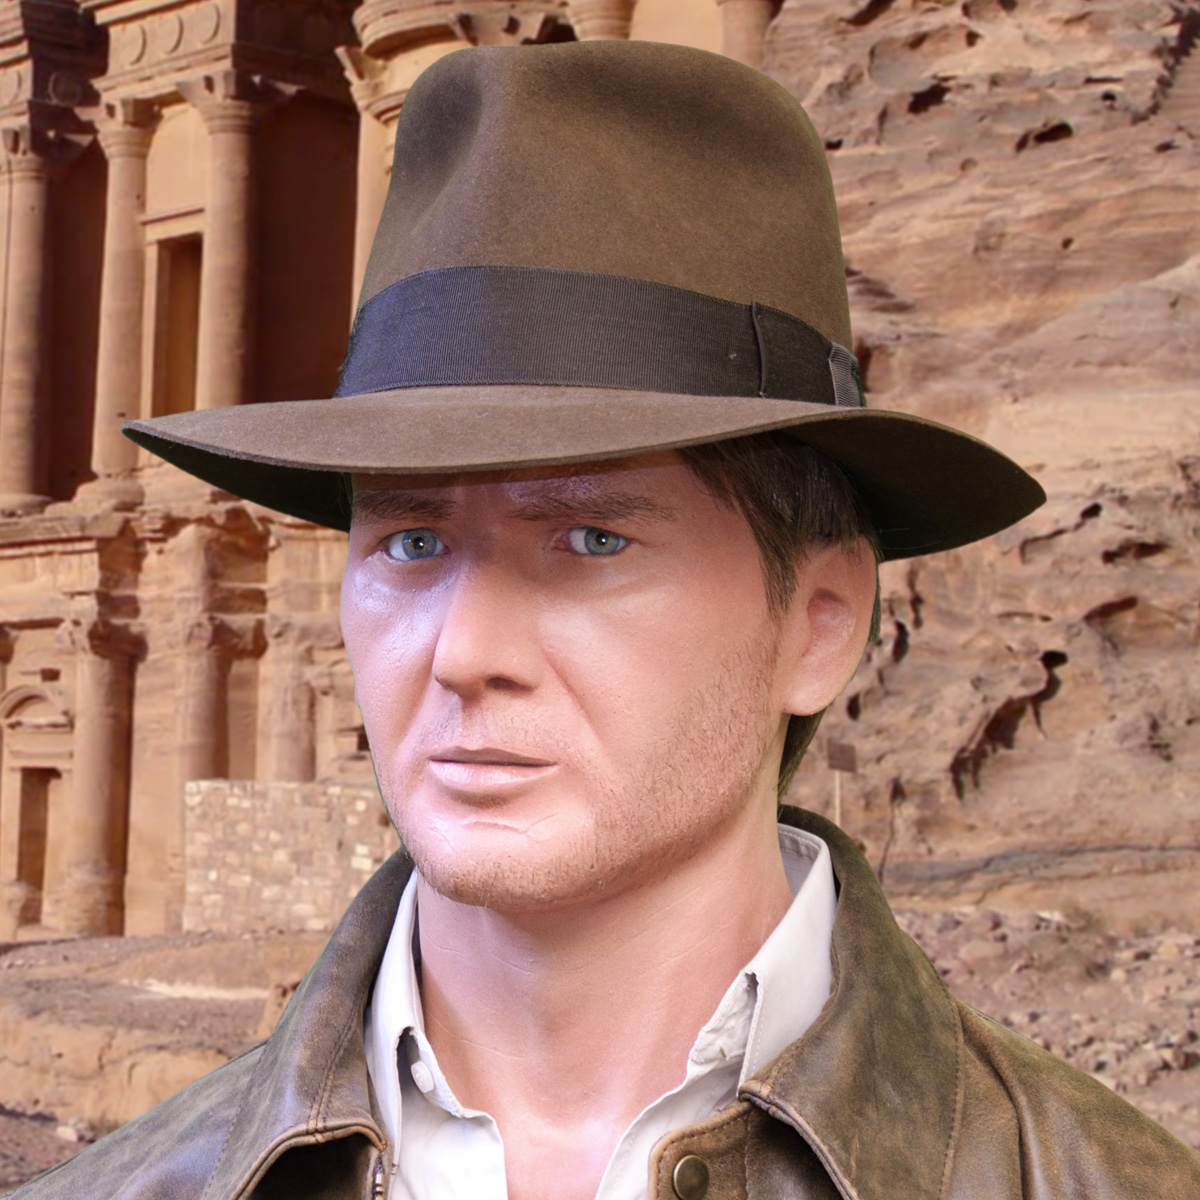 Indiana Jones Fur Felt Fedora Hat